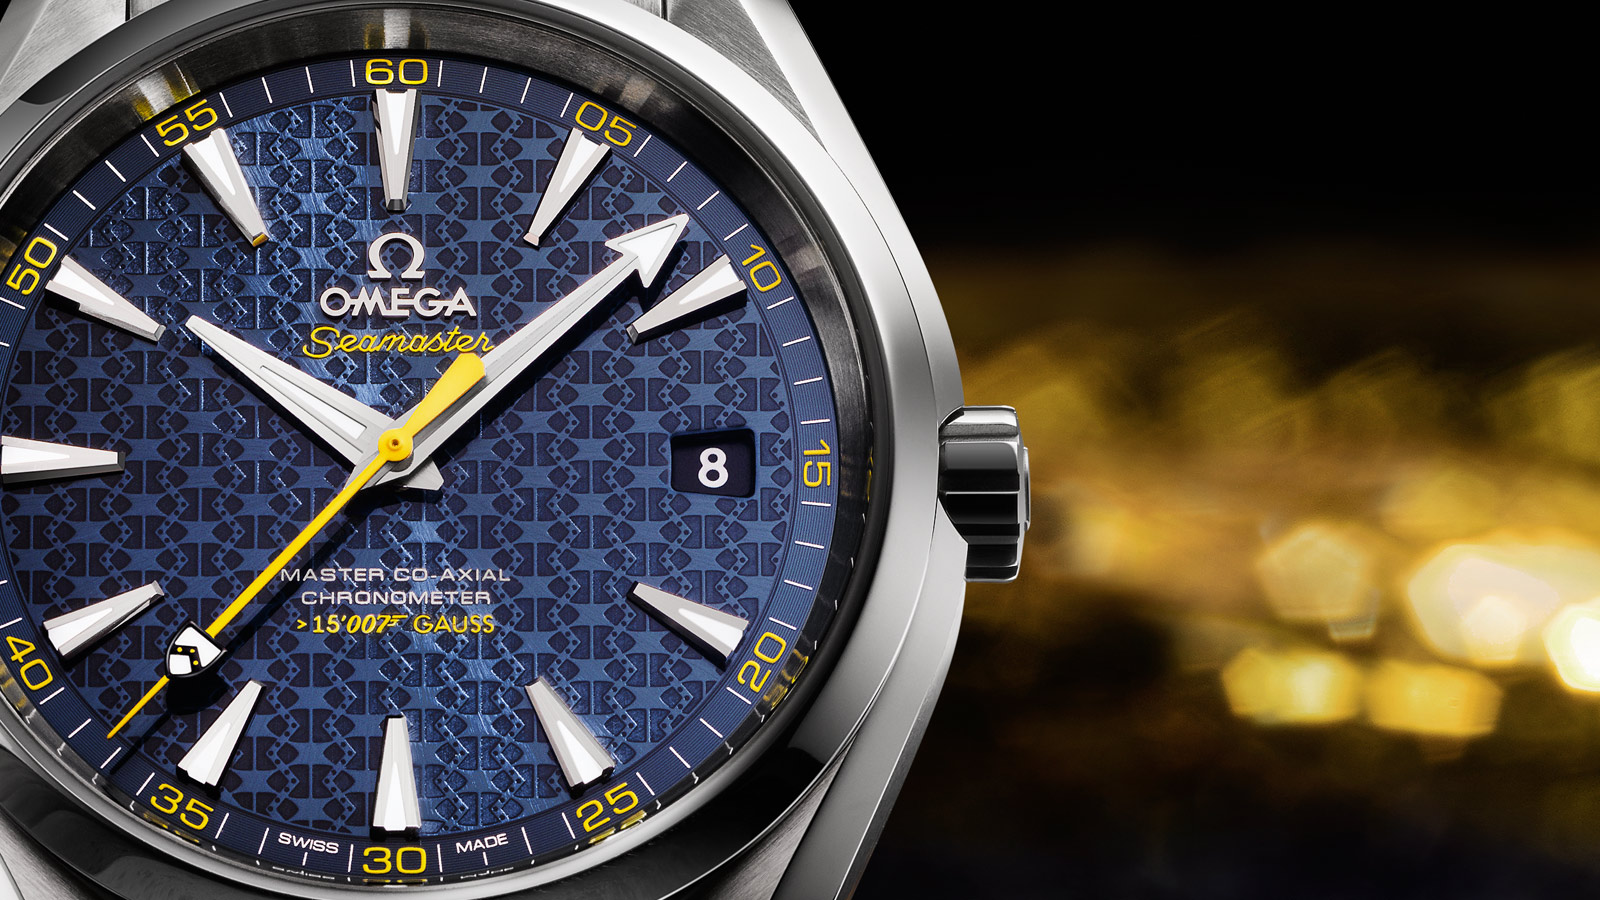 omega seamaster aqua terra james bond limited edition men's watch